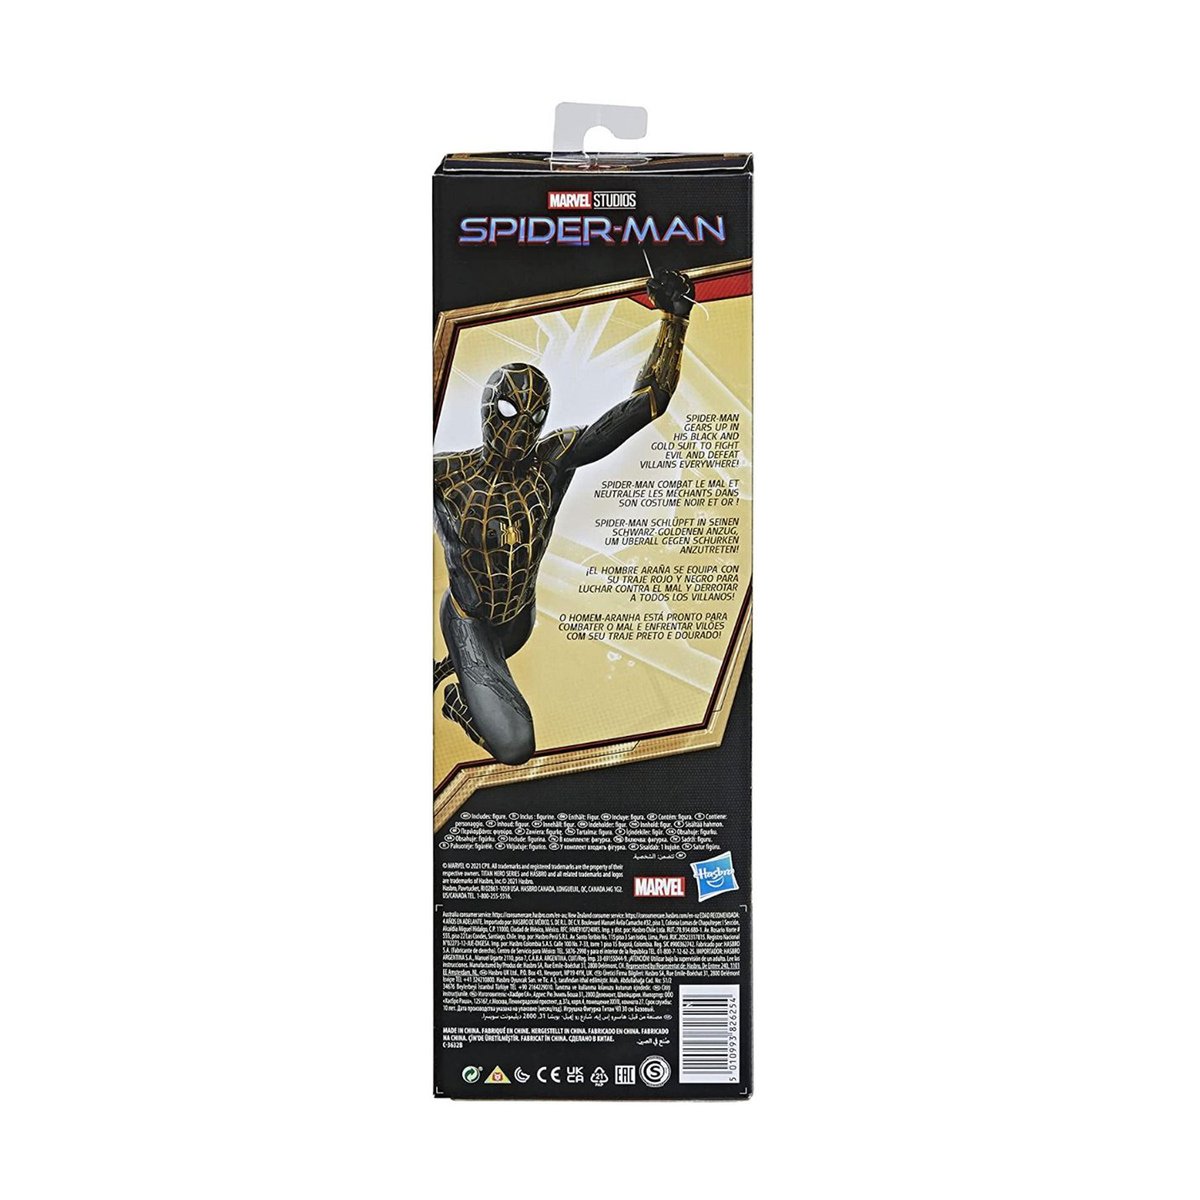 Spiderman Titan Hero Series Black & Gold Suit Spider-Man Action Figures F2438